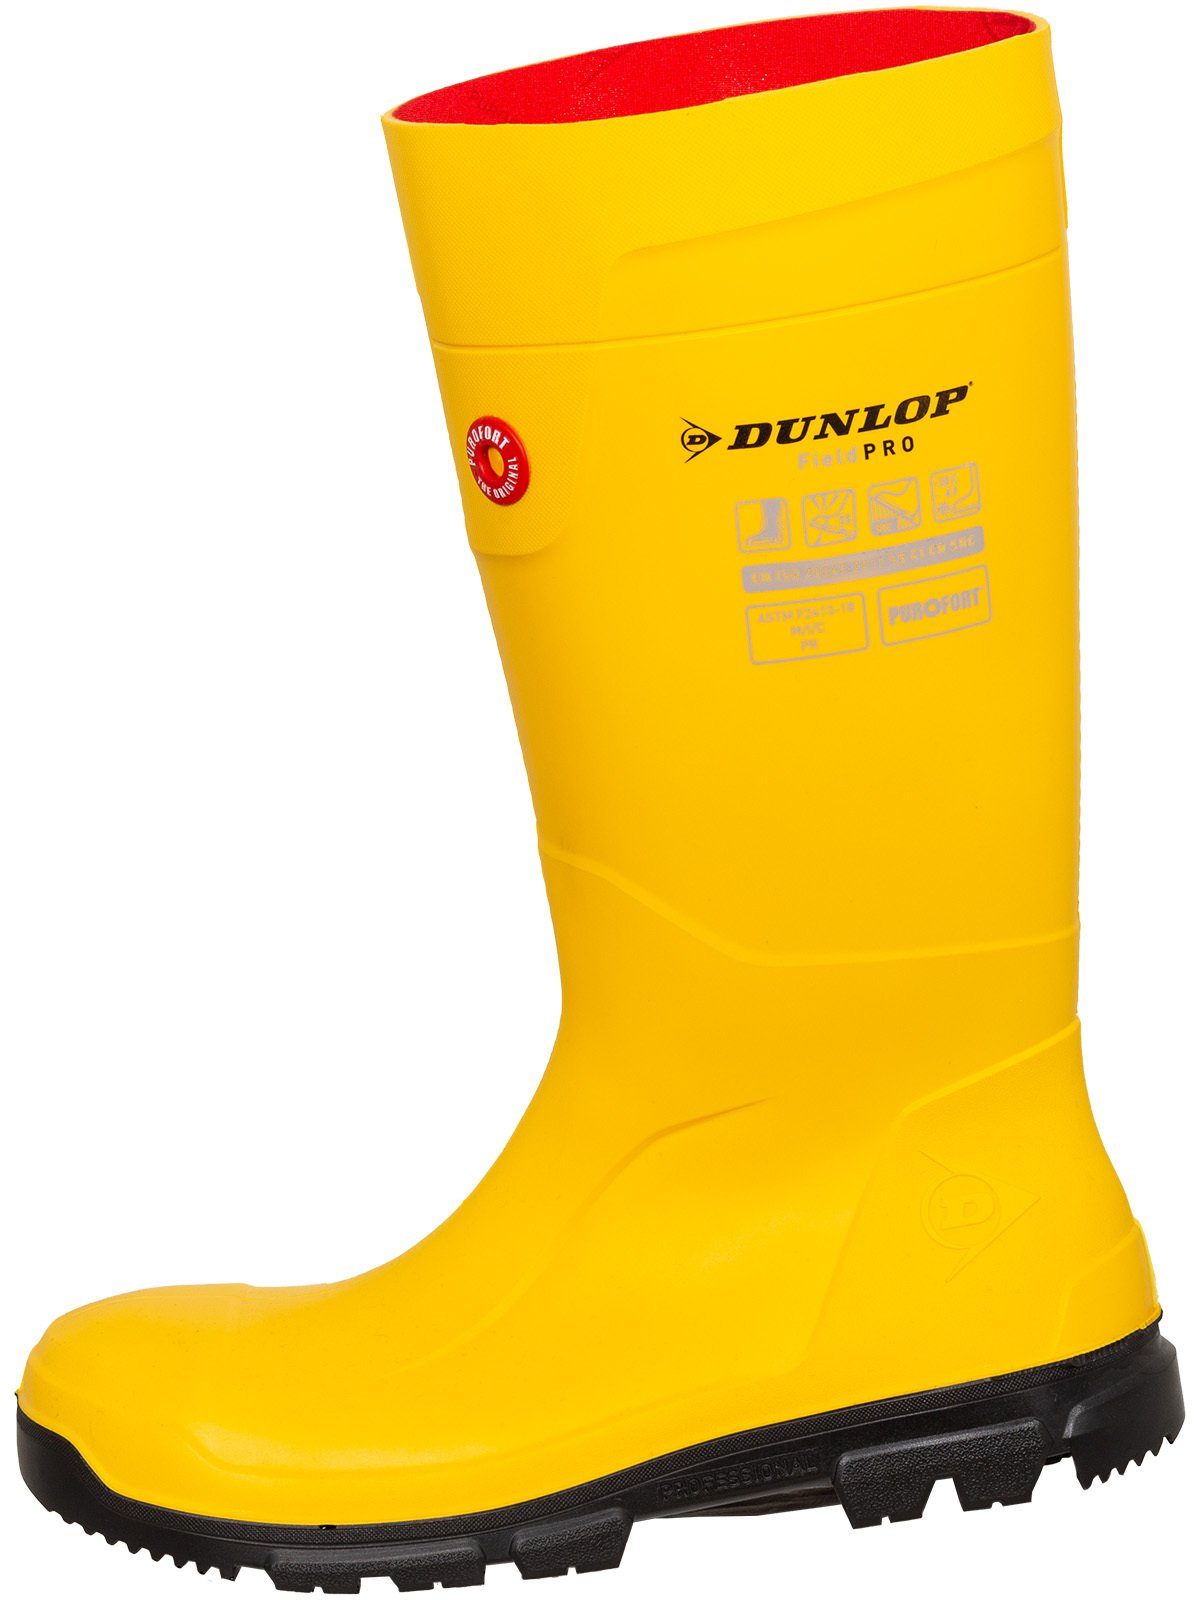 Field Dunlop Purofort S5 Pro Gummistiefel Dunlop_Workwear